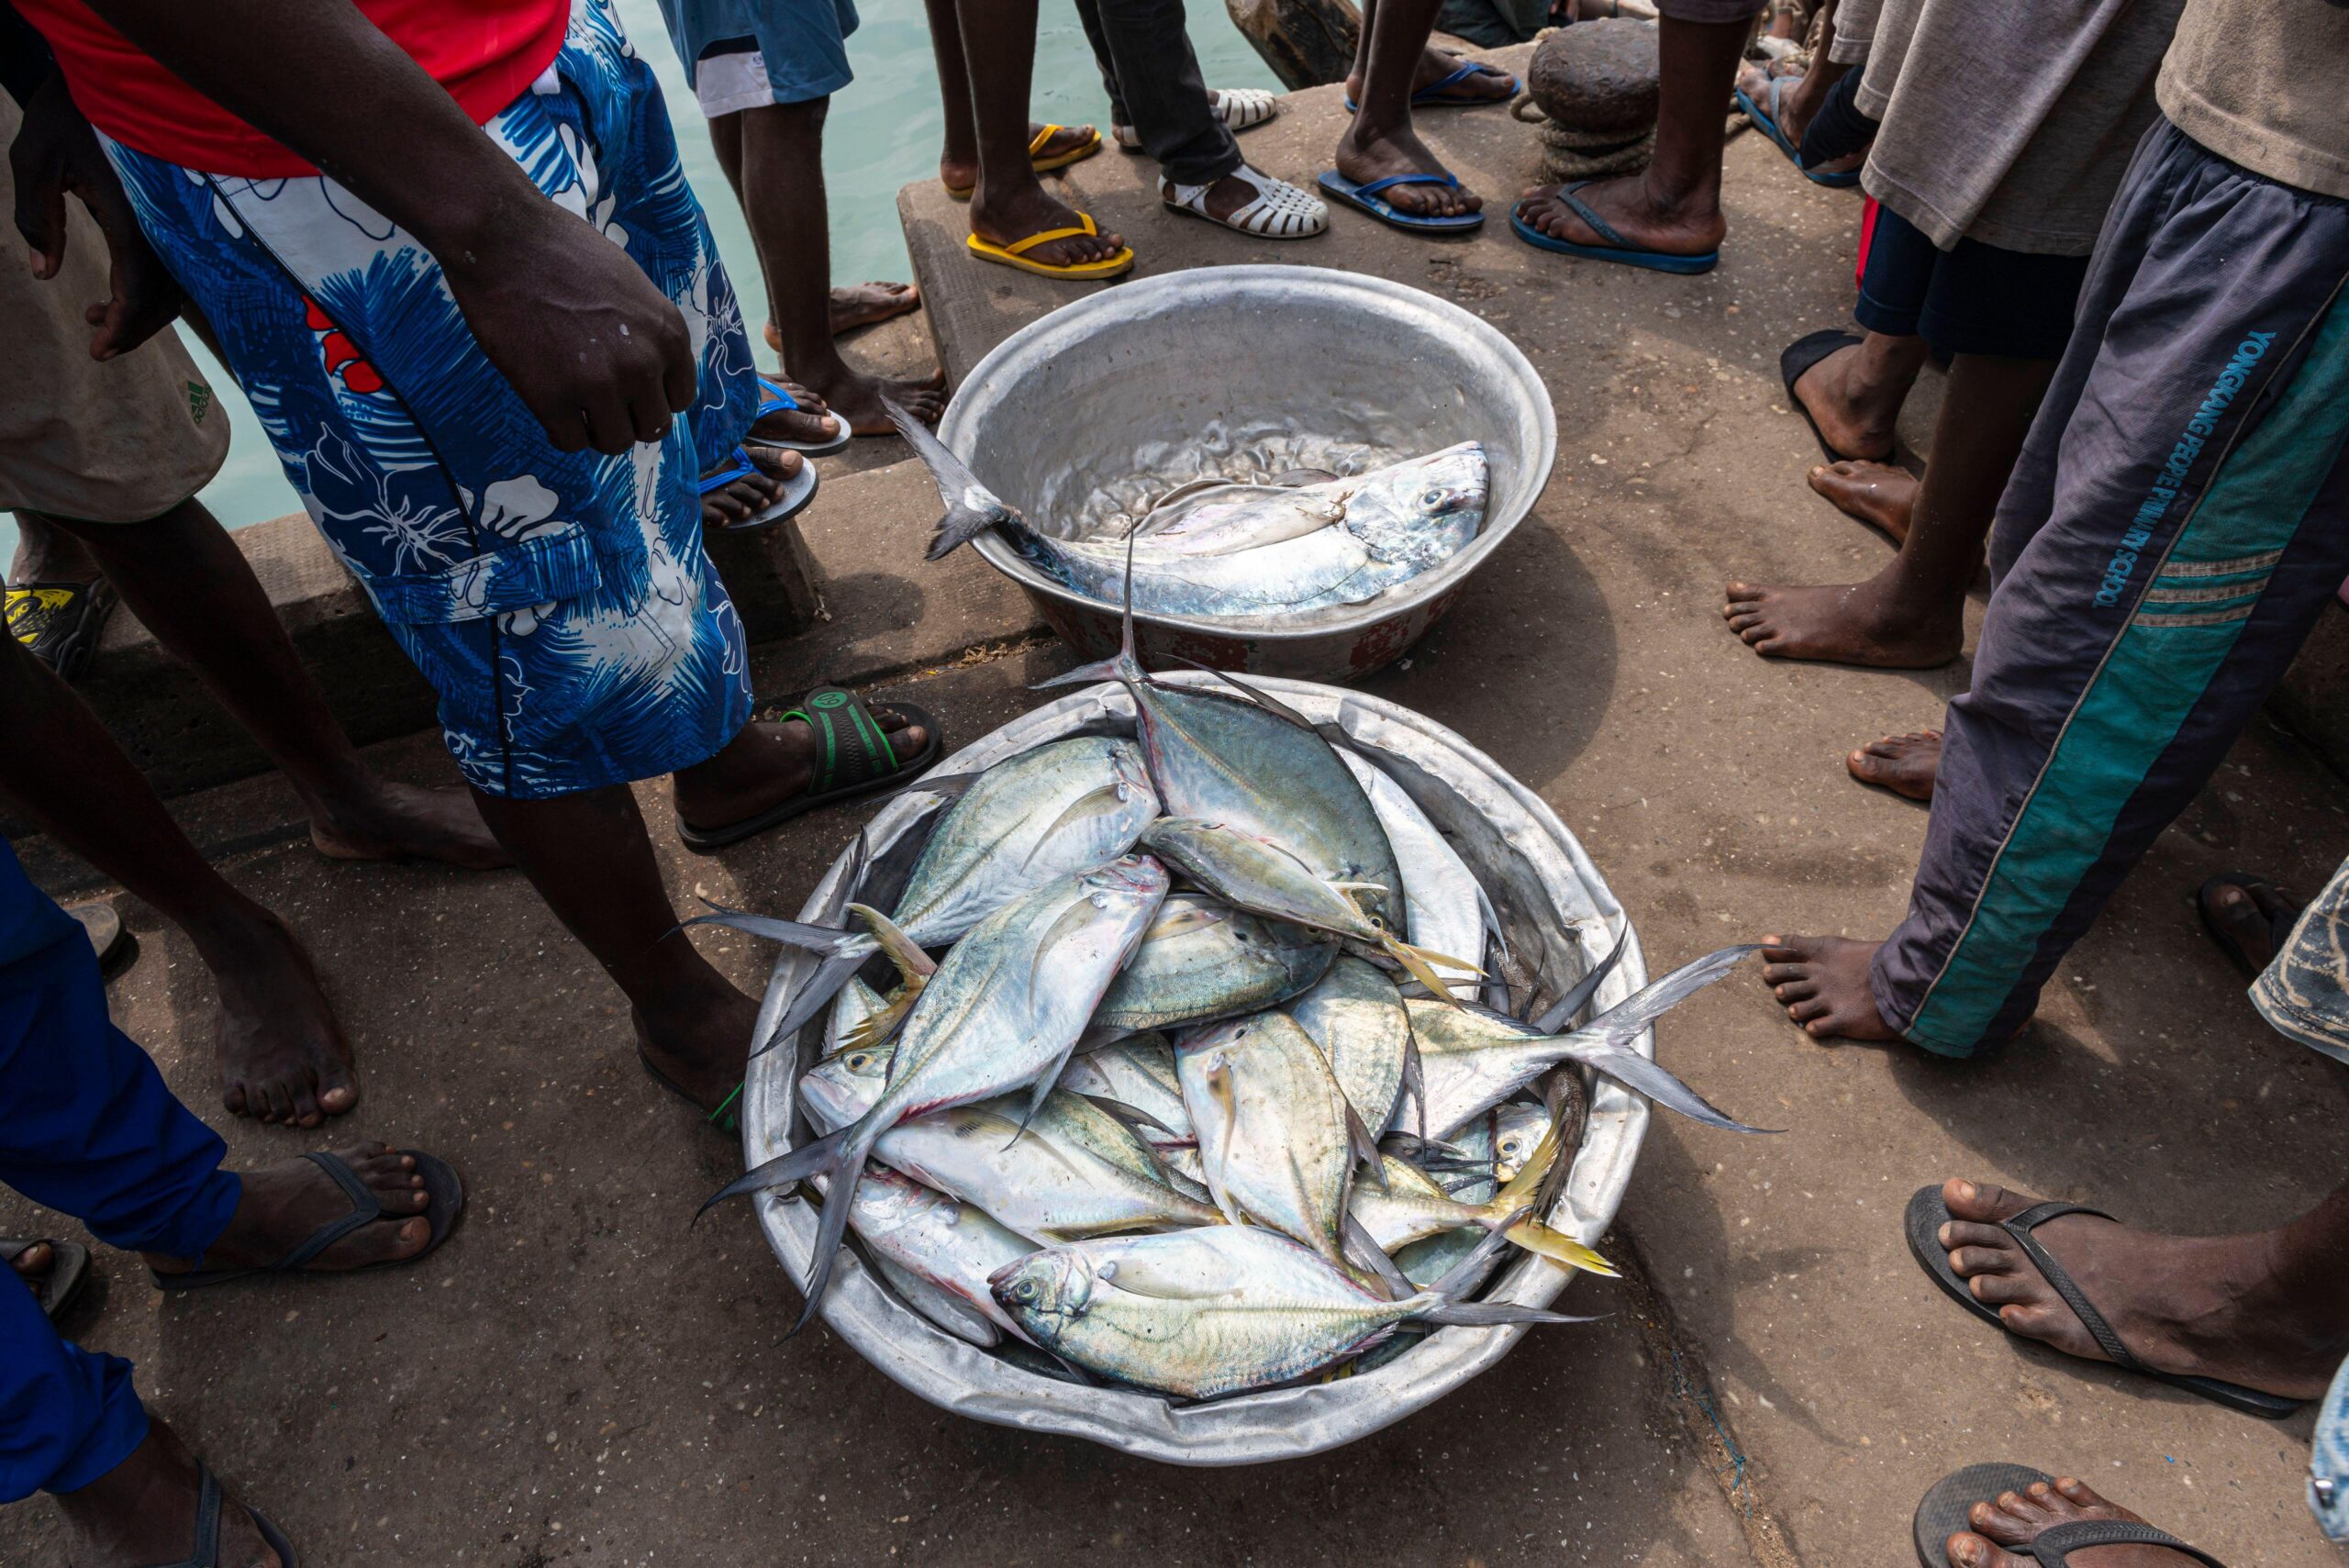 Global Fishing Watch celebra su asociación con Benín para luchar contra la pesca ilegal